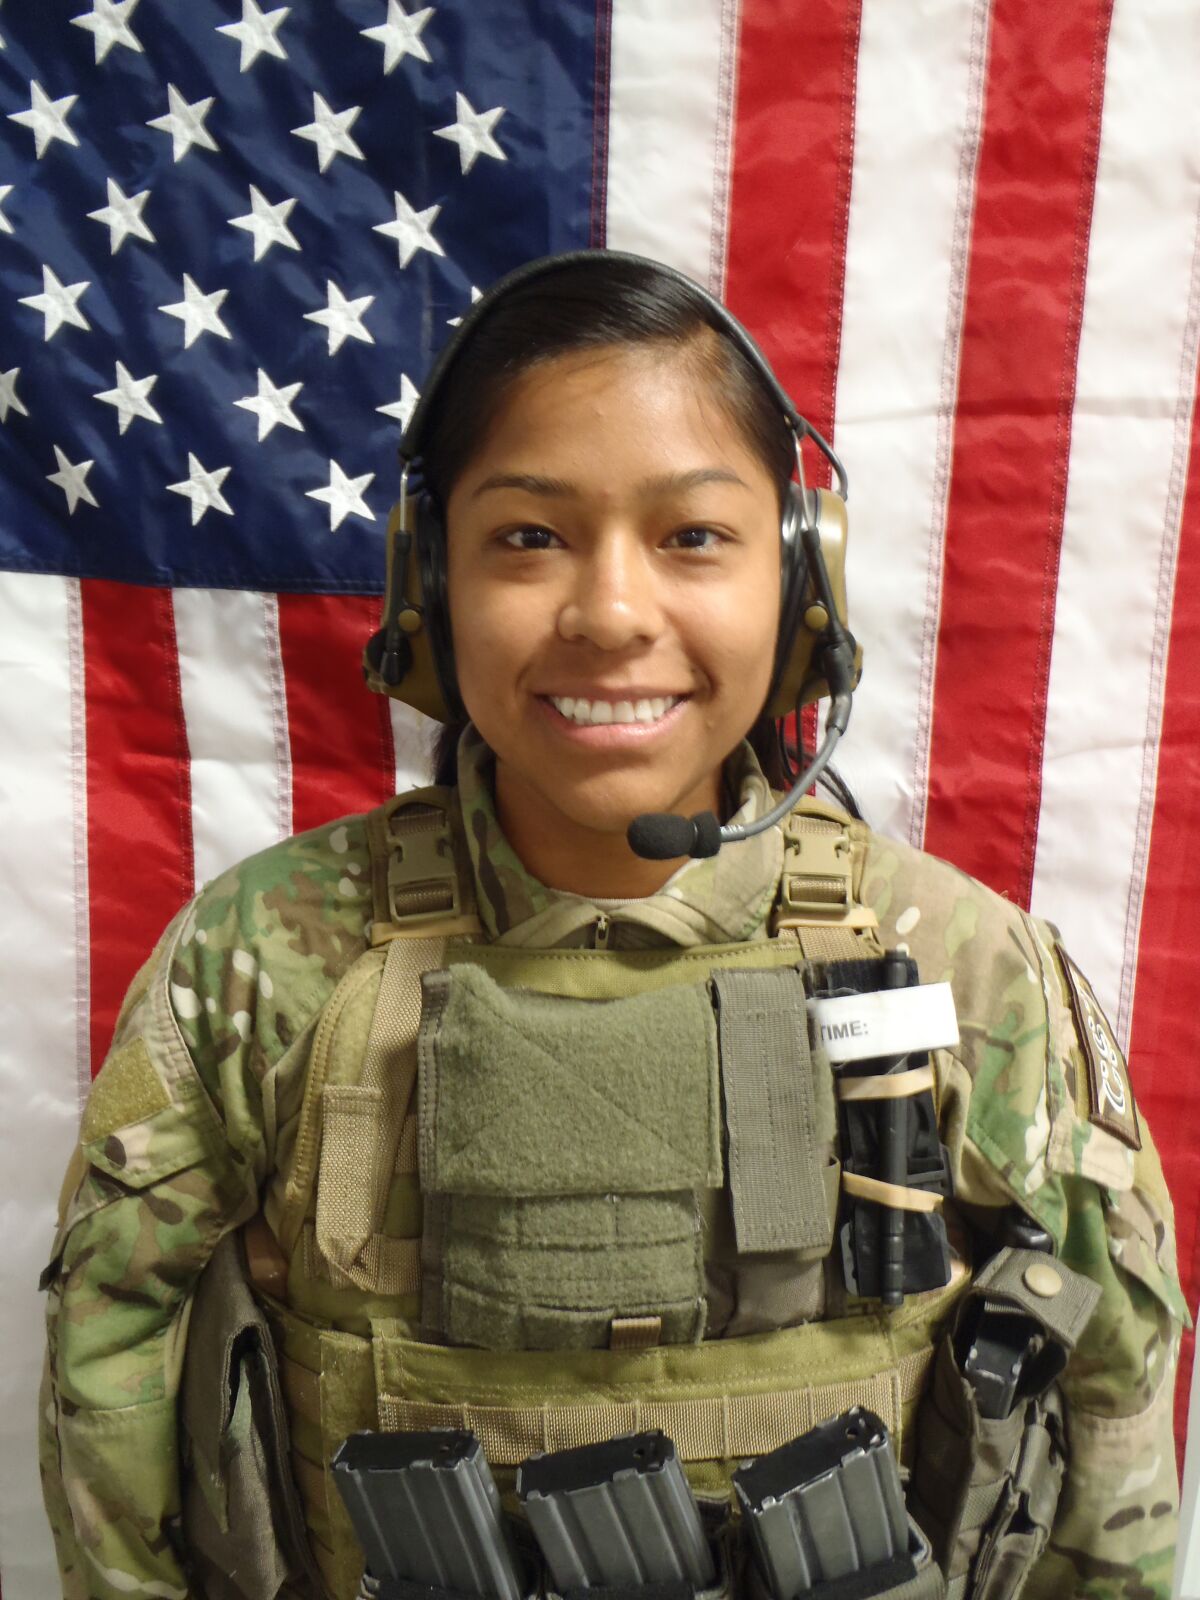 Then-Army 1st Lt. Jennifer Moreno in an undated photo. AP/U.S. Army